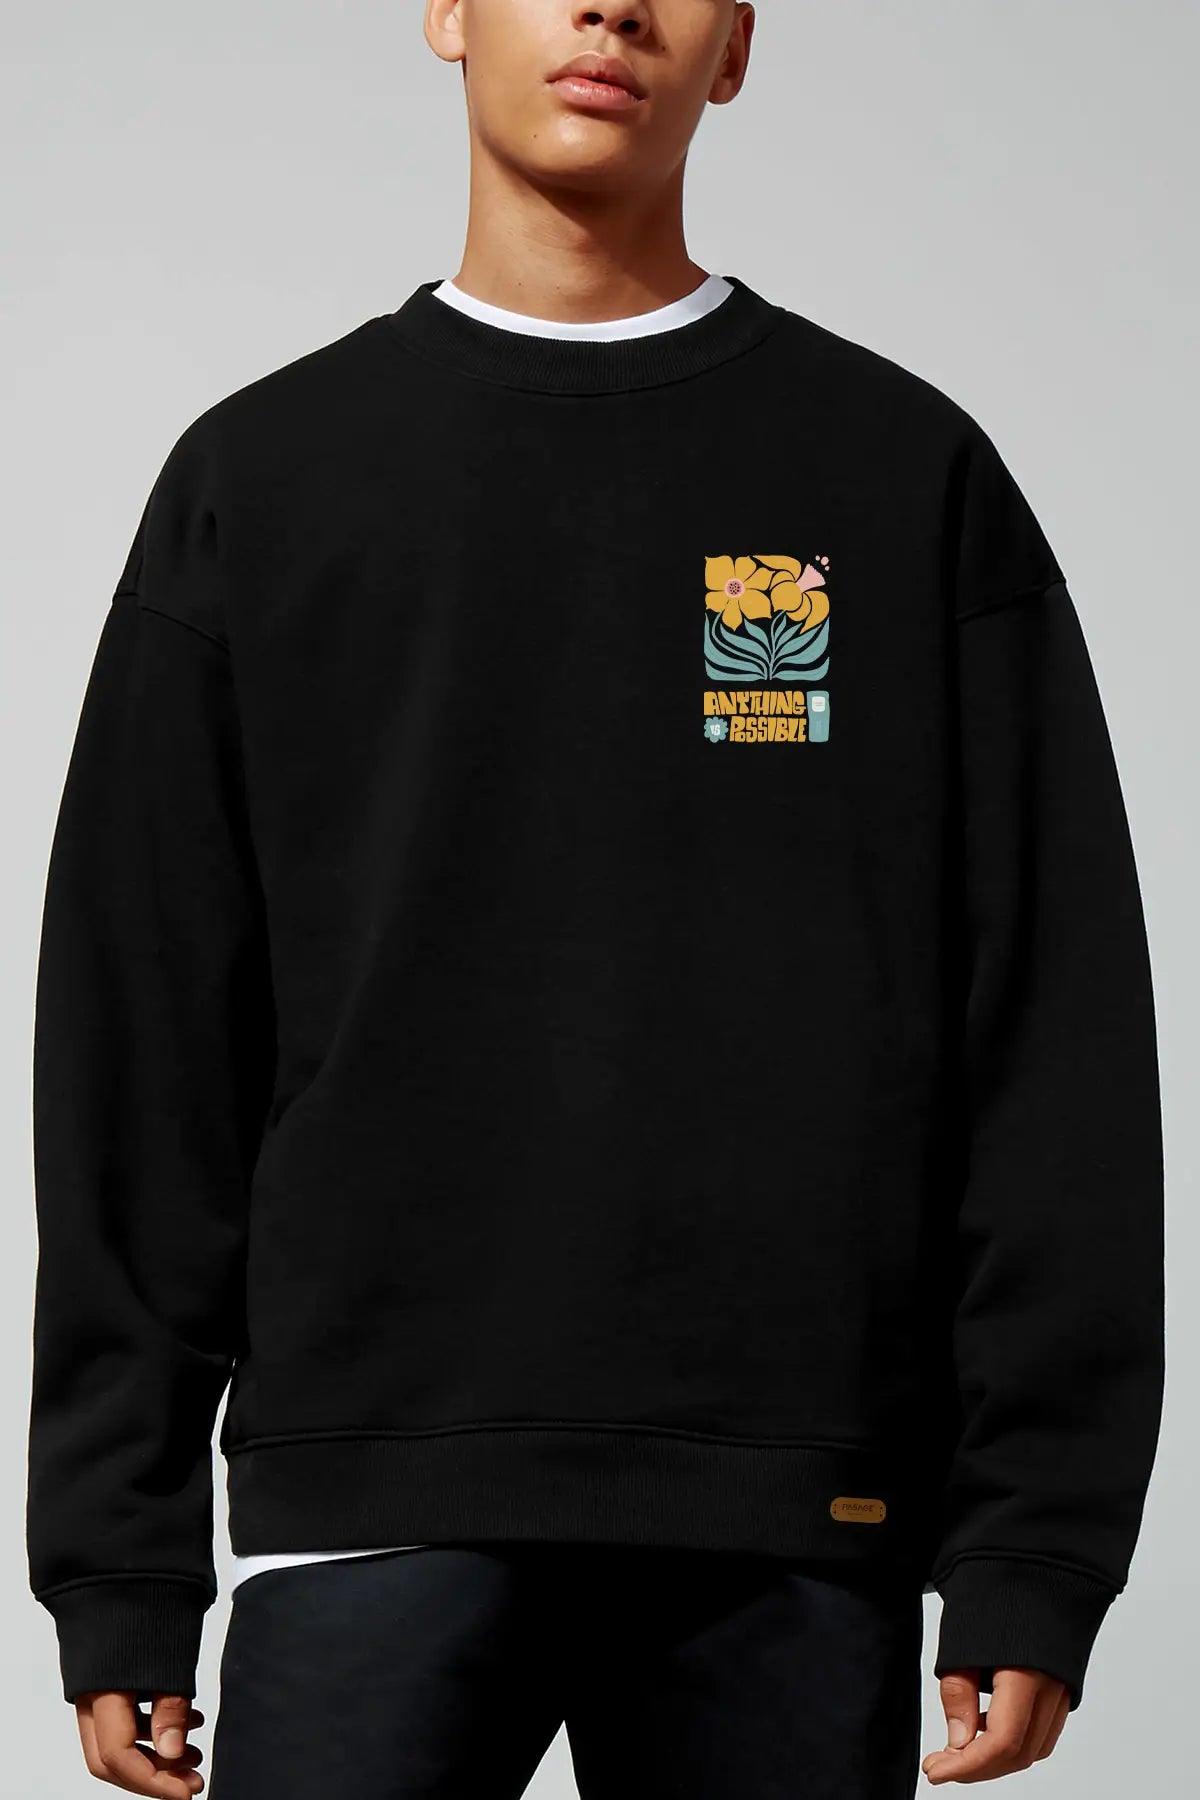 Anything Possible Oversize Erkek Sweatshirt - PΛSΛGE